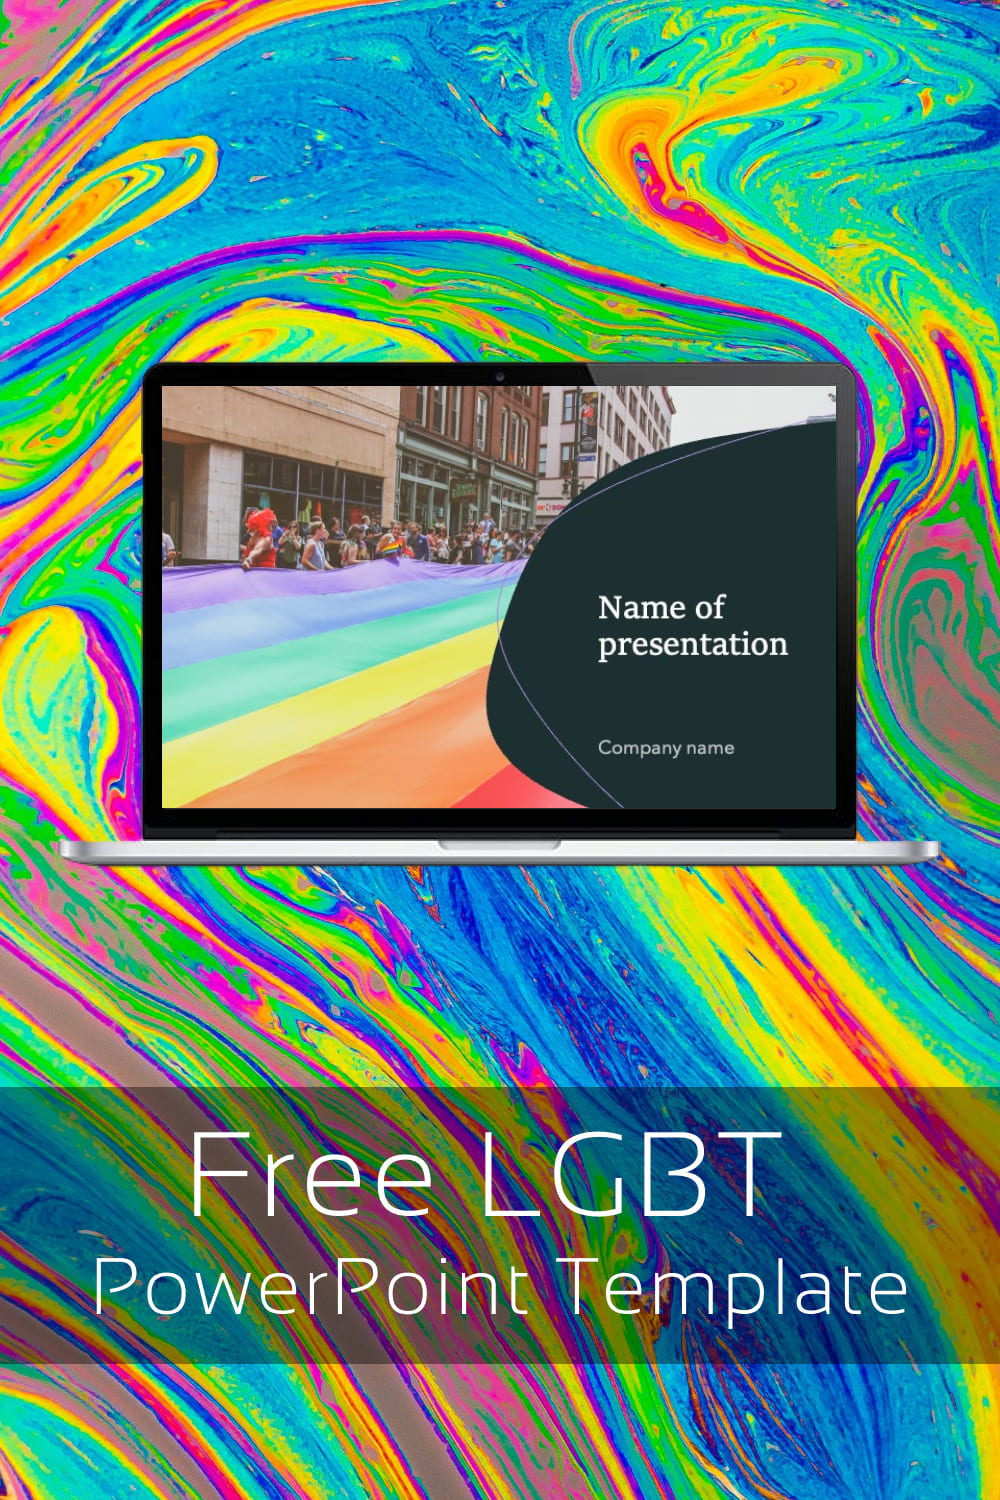 Pinterest Free LGBT Powerpoint Template.